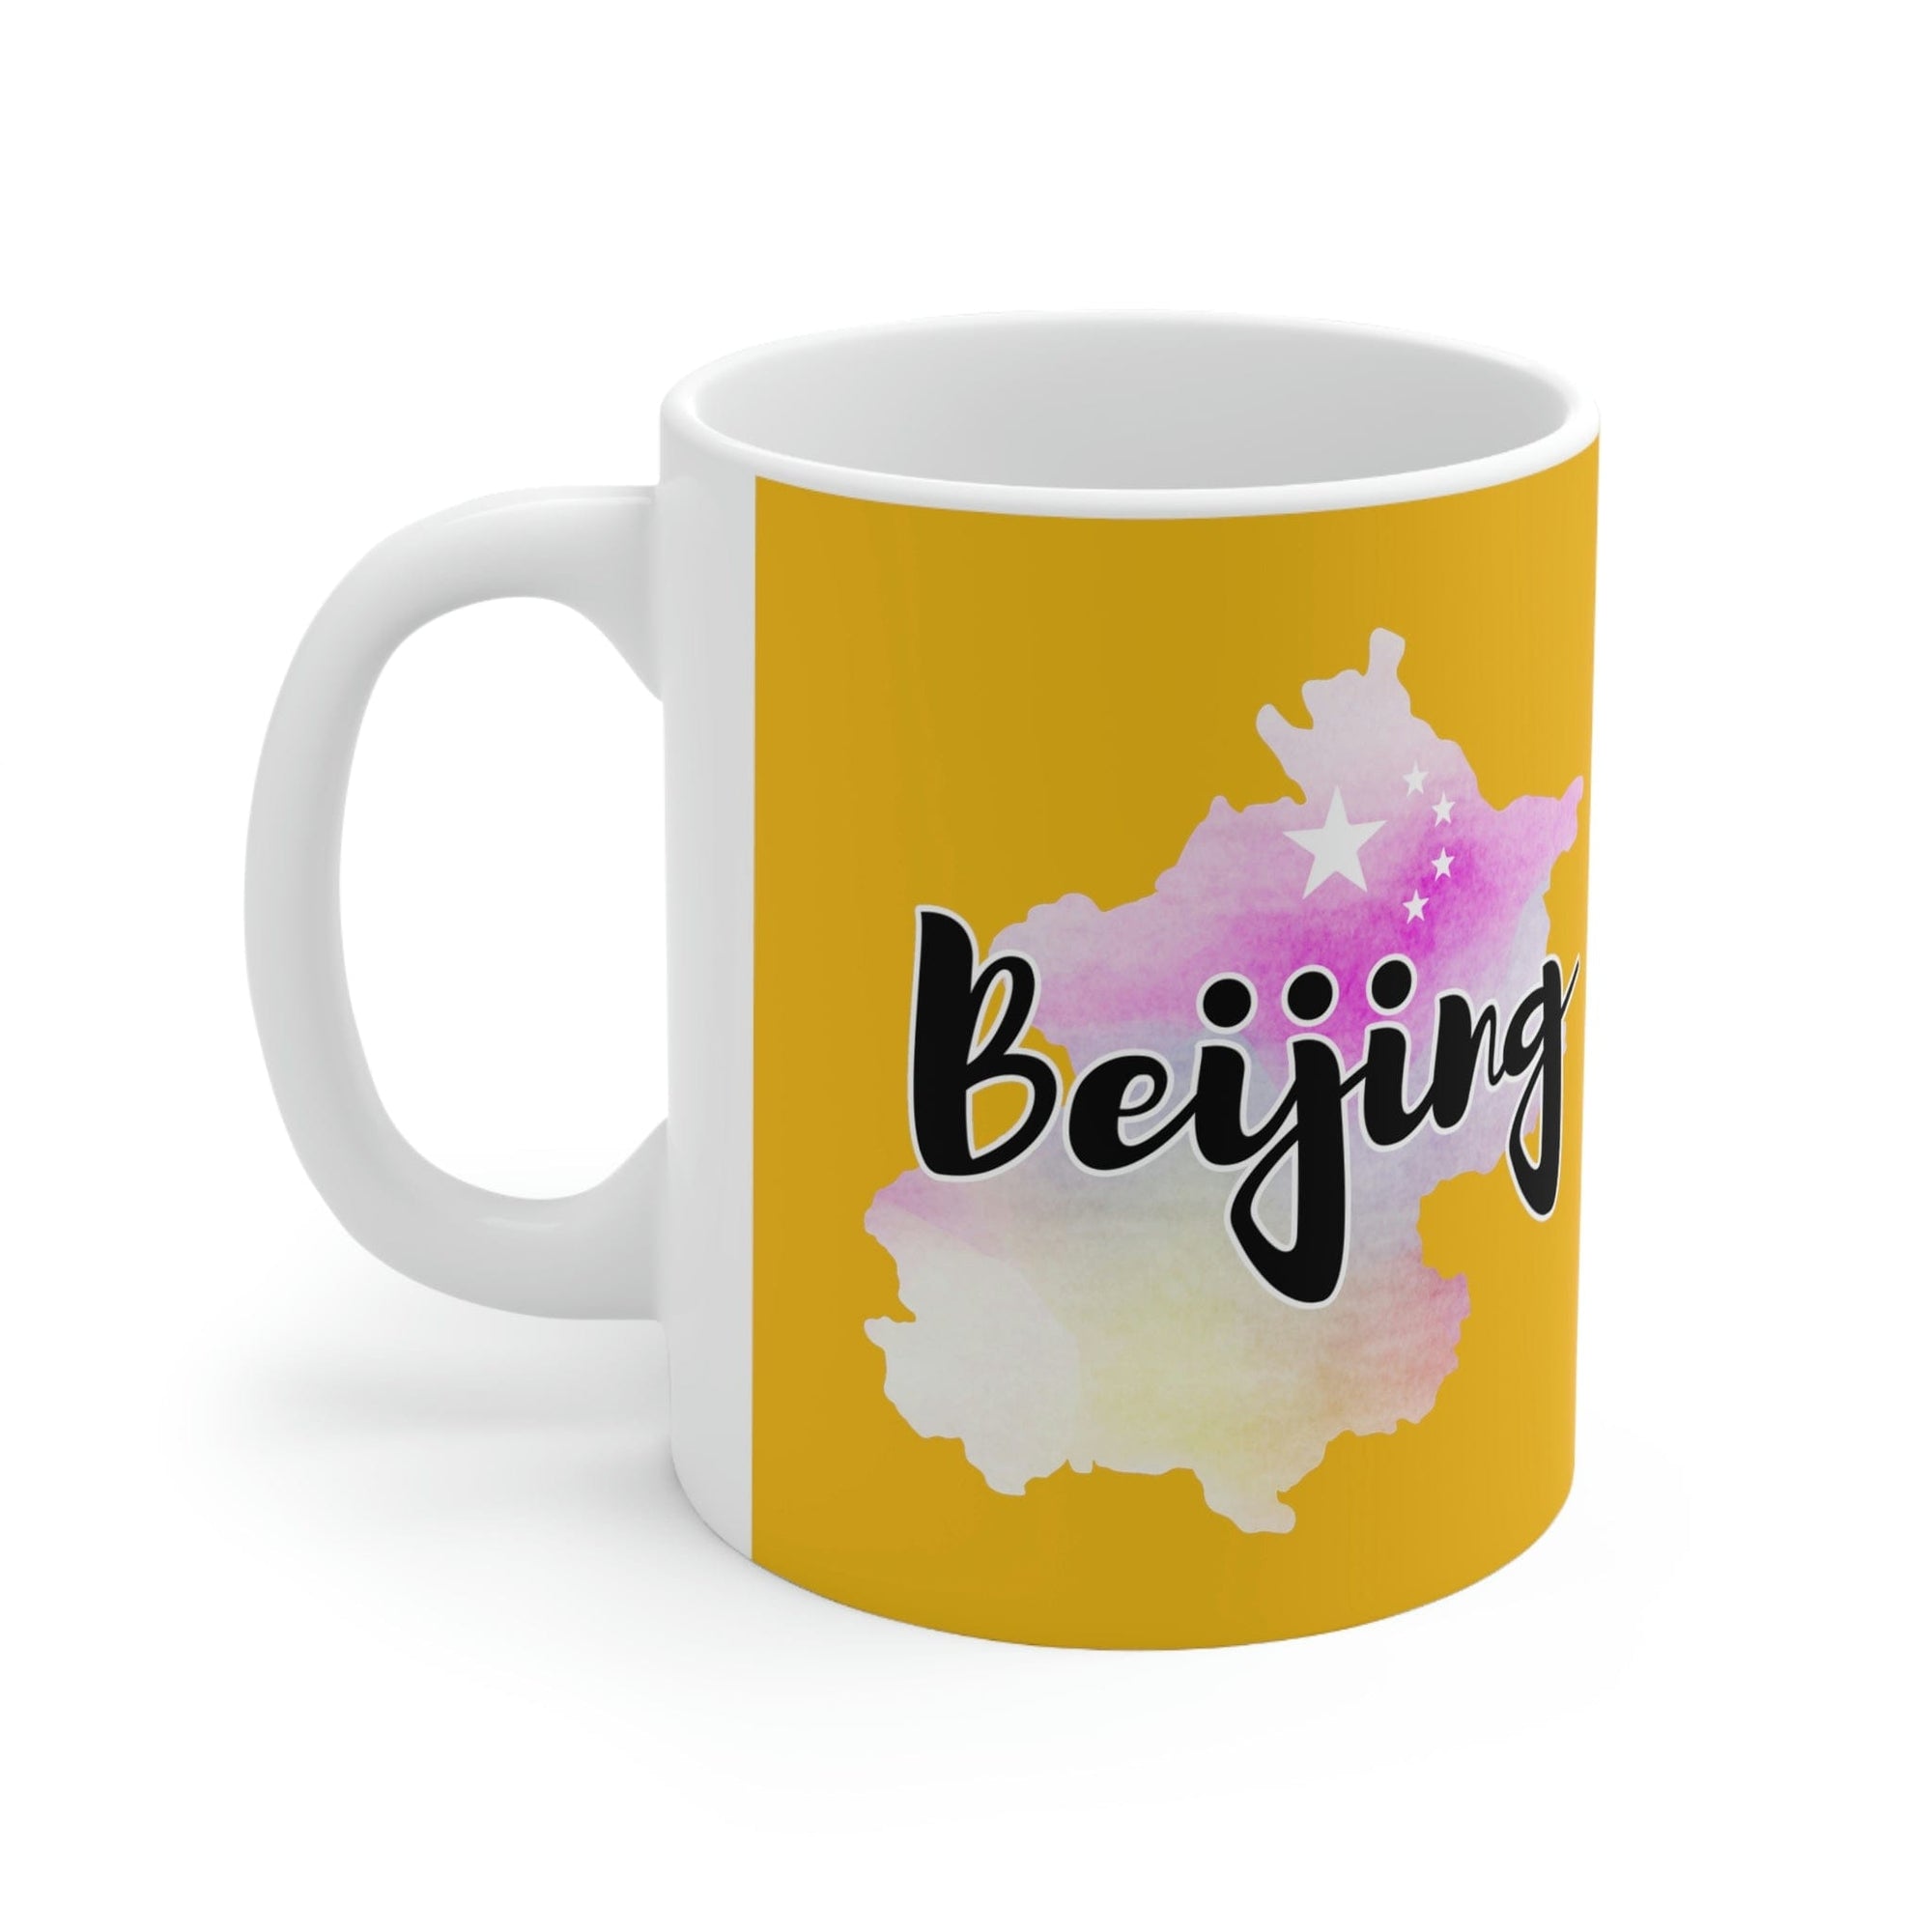 BEIJING - Awesome Ceramic Mug, Exclusive Design